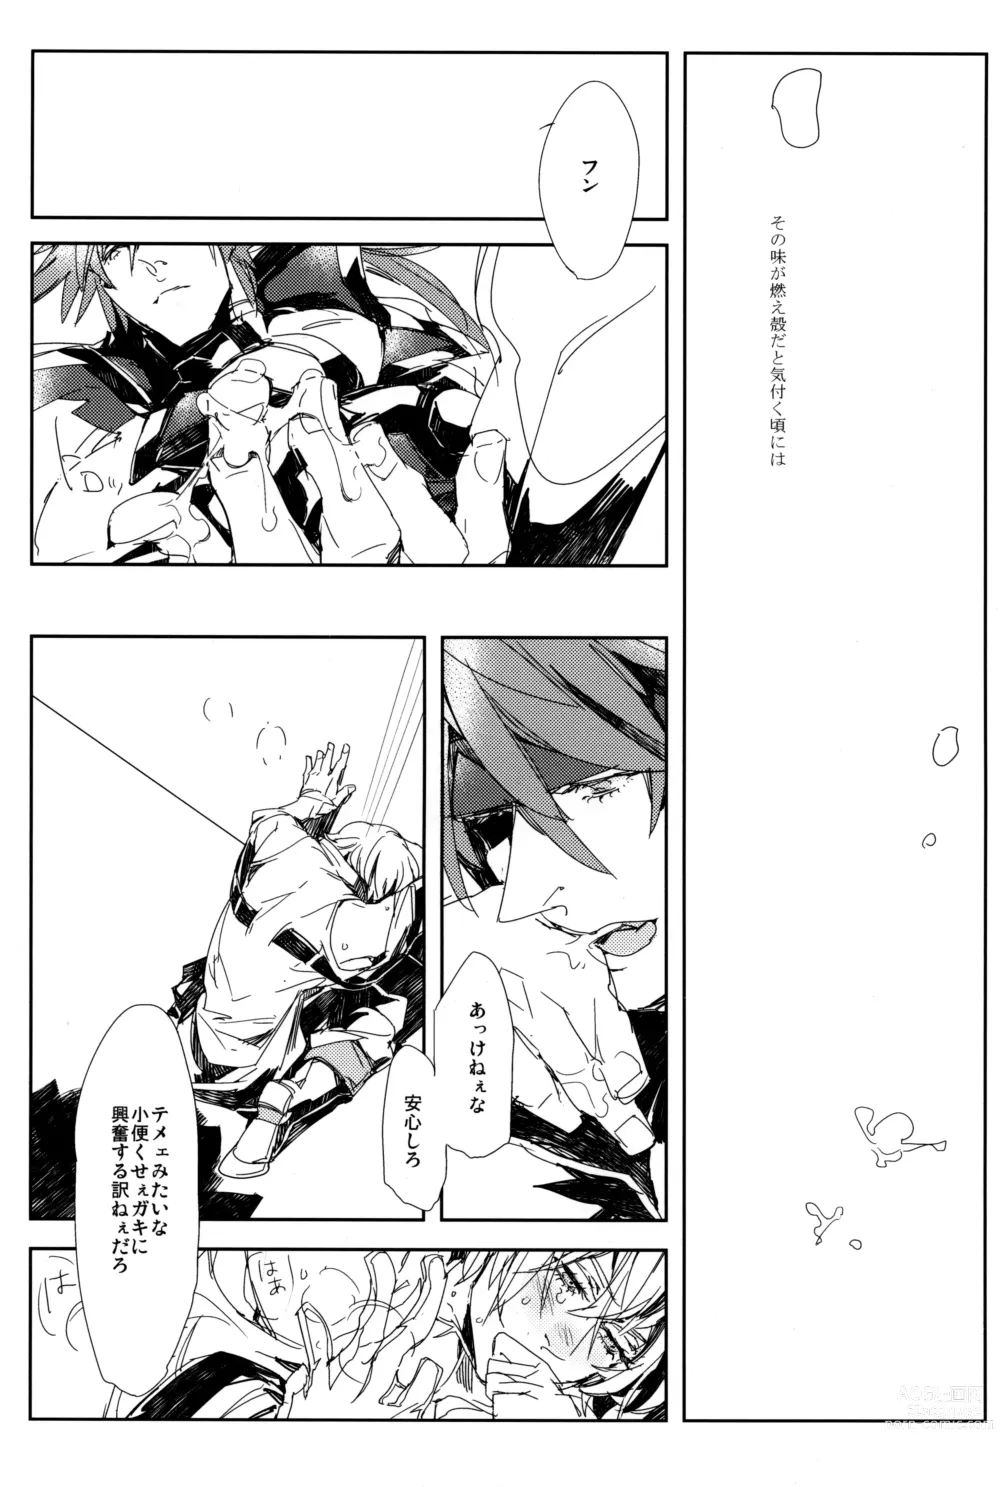 Page 43 of doujinshi Perversion